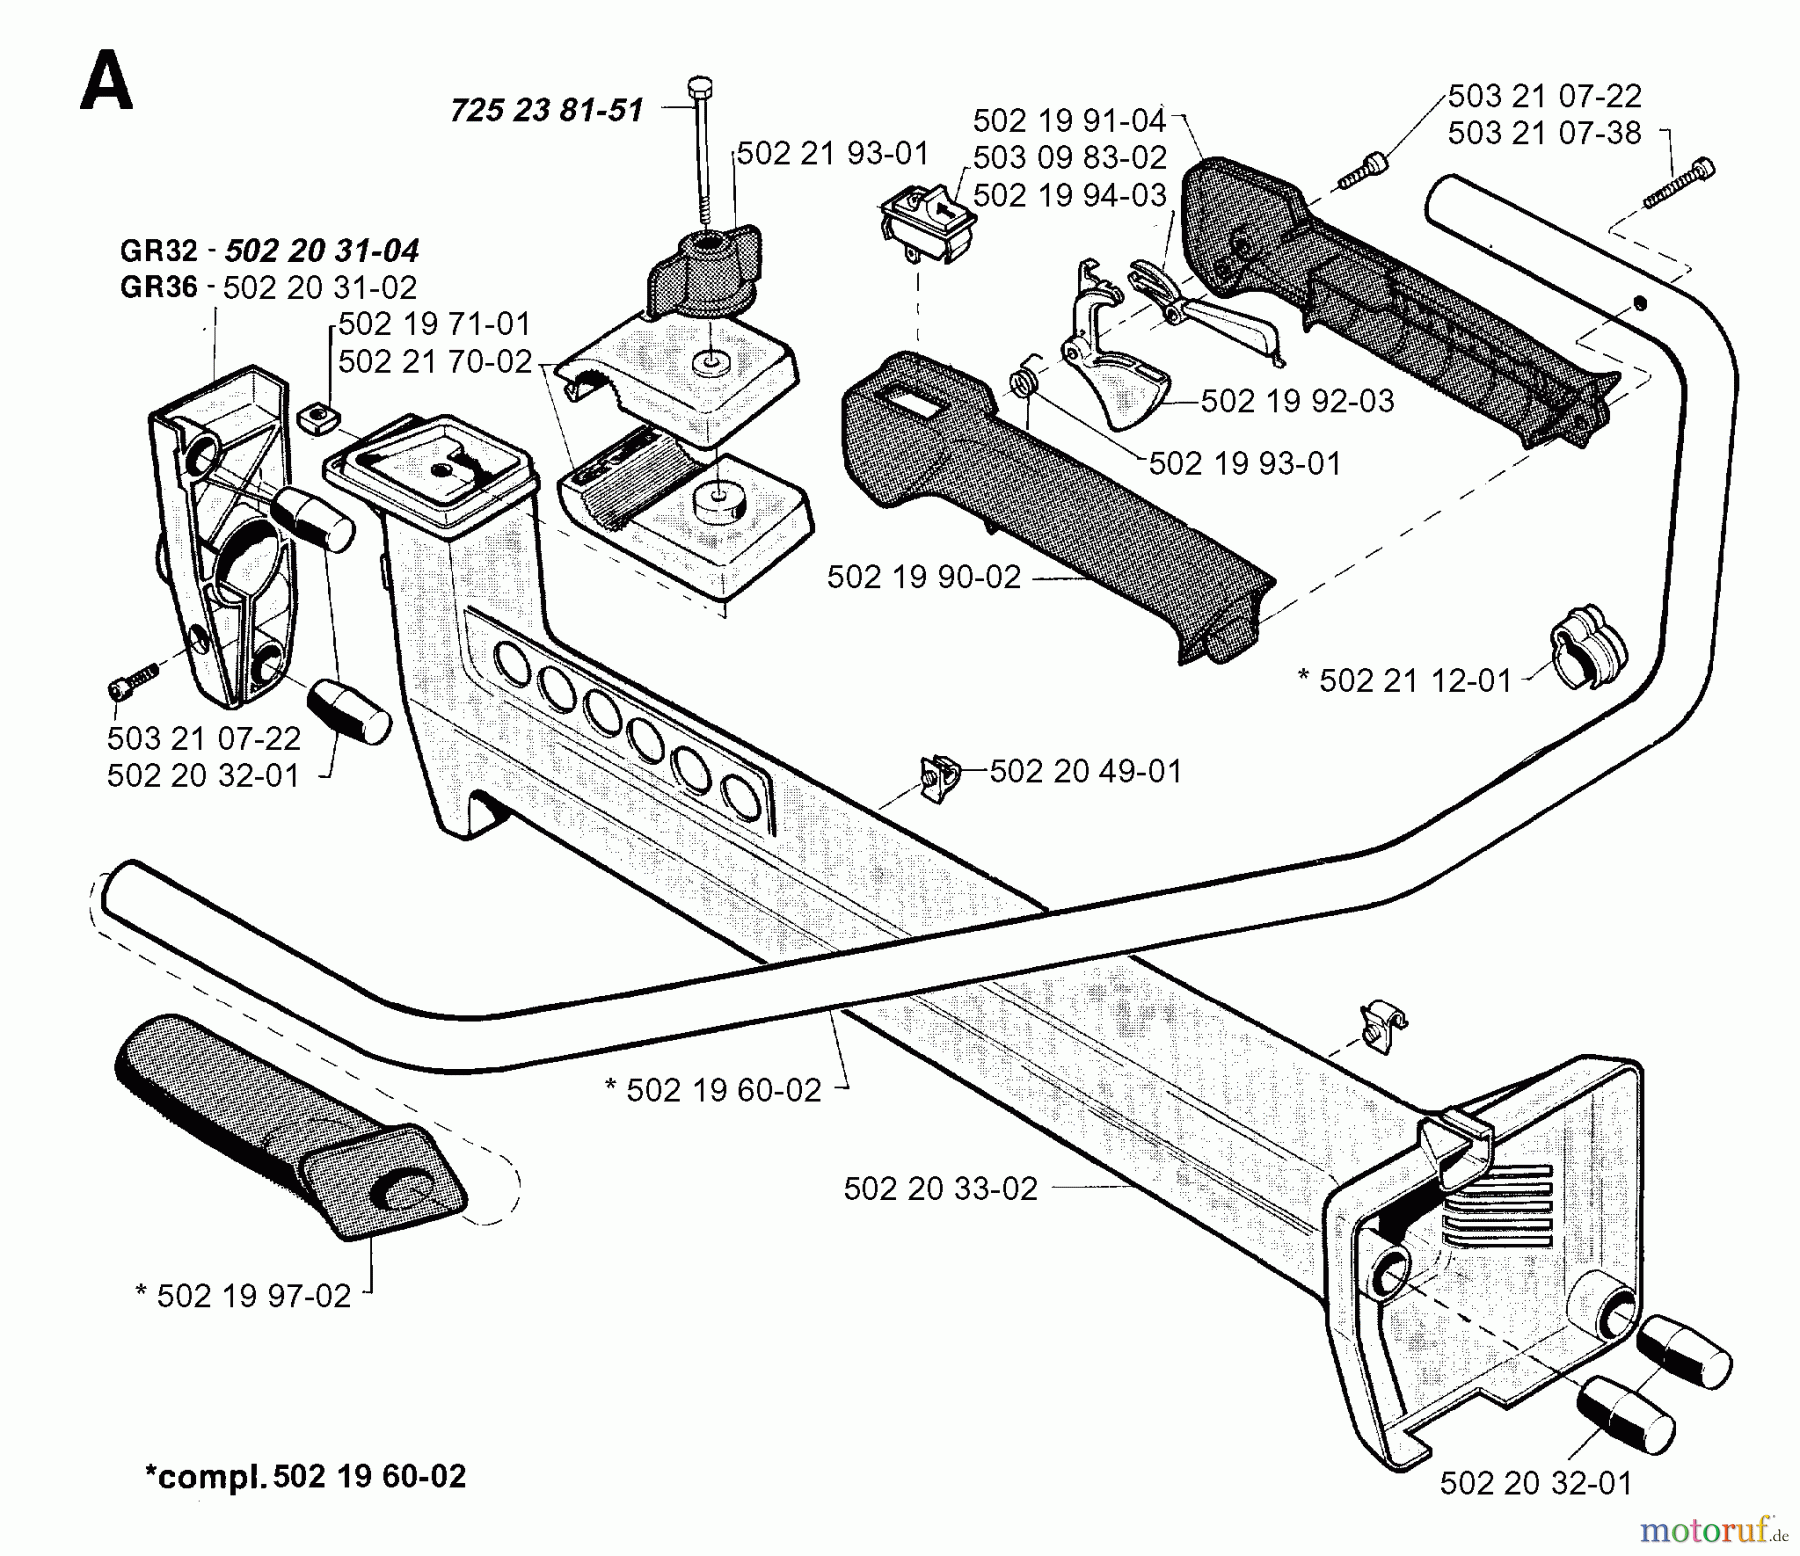  Jonsered Motorsensen, Trimmer GR36 - Jonsered String/Brush Trimmer (1994-02) HANDLE CONTROLS